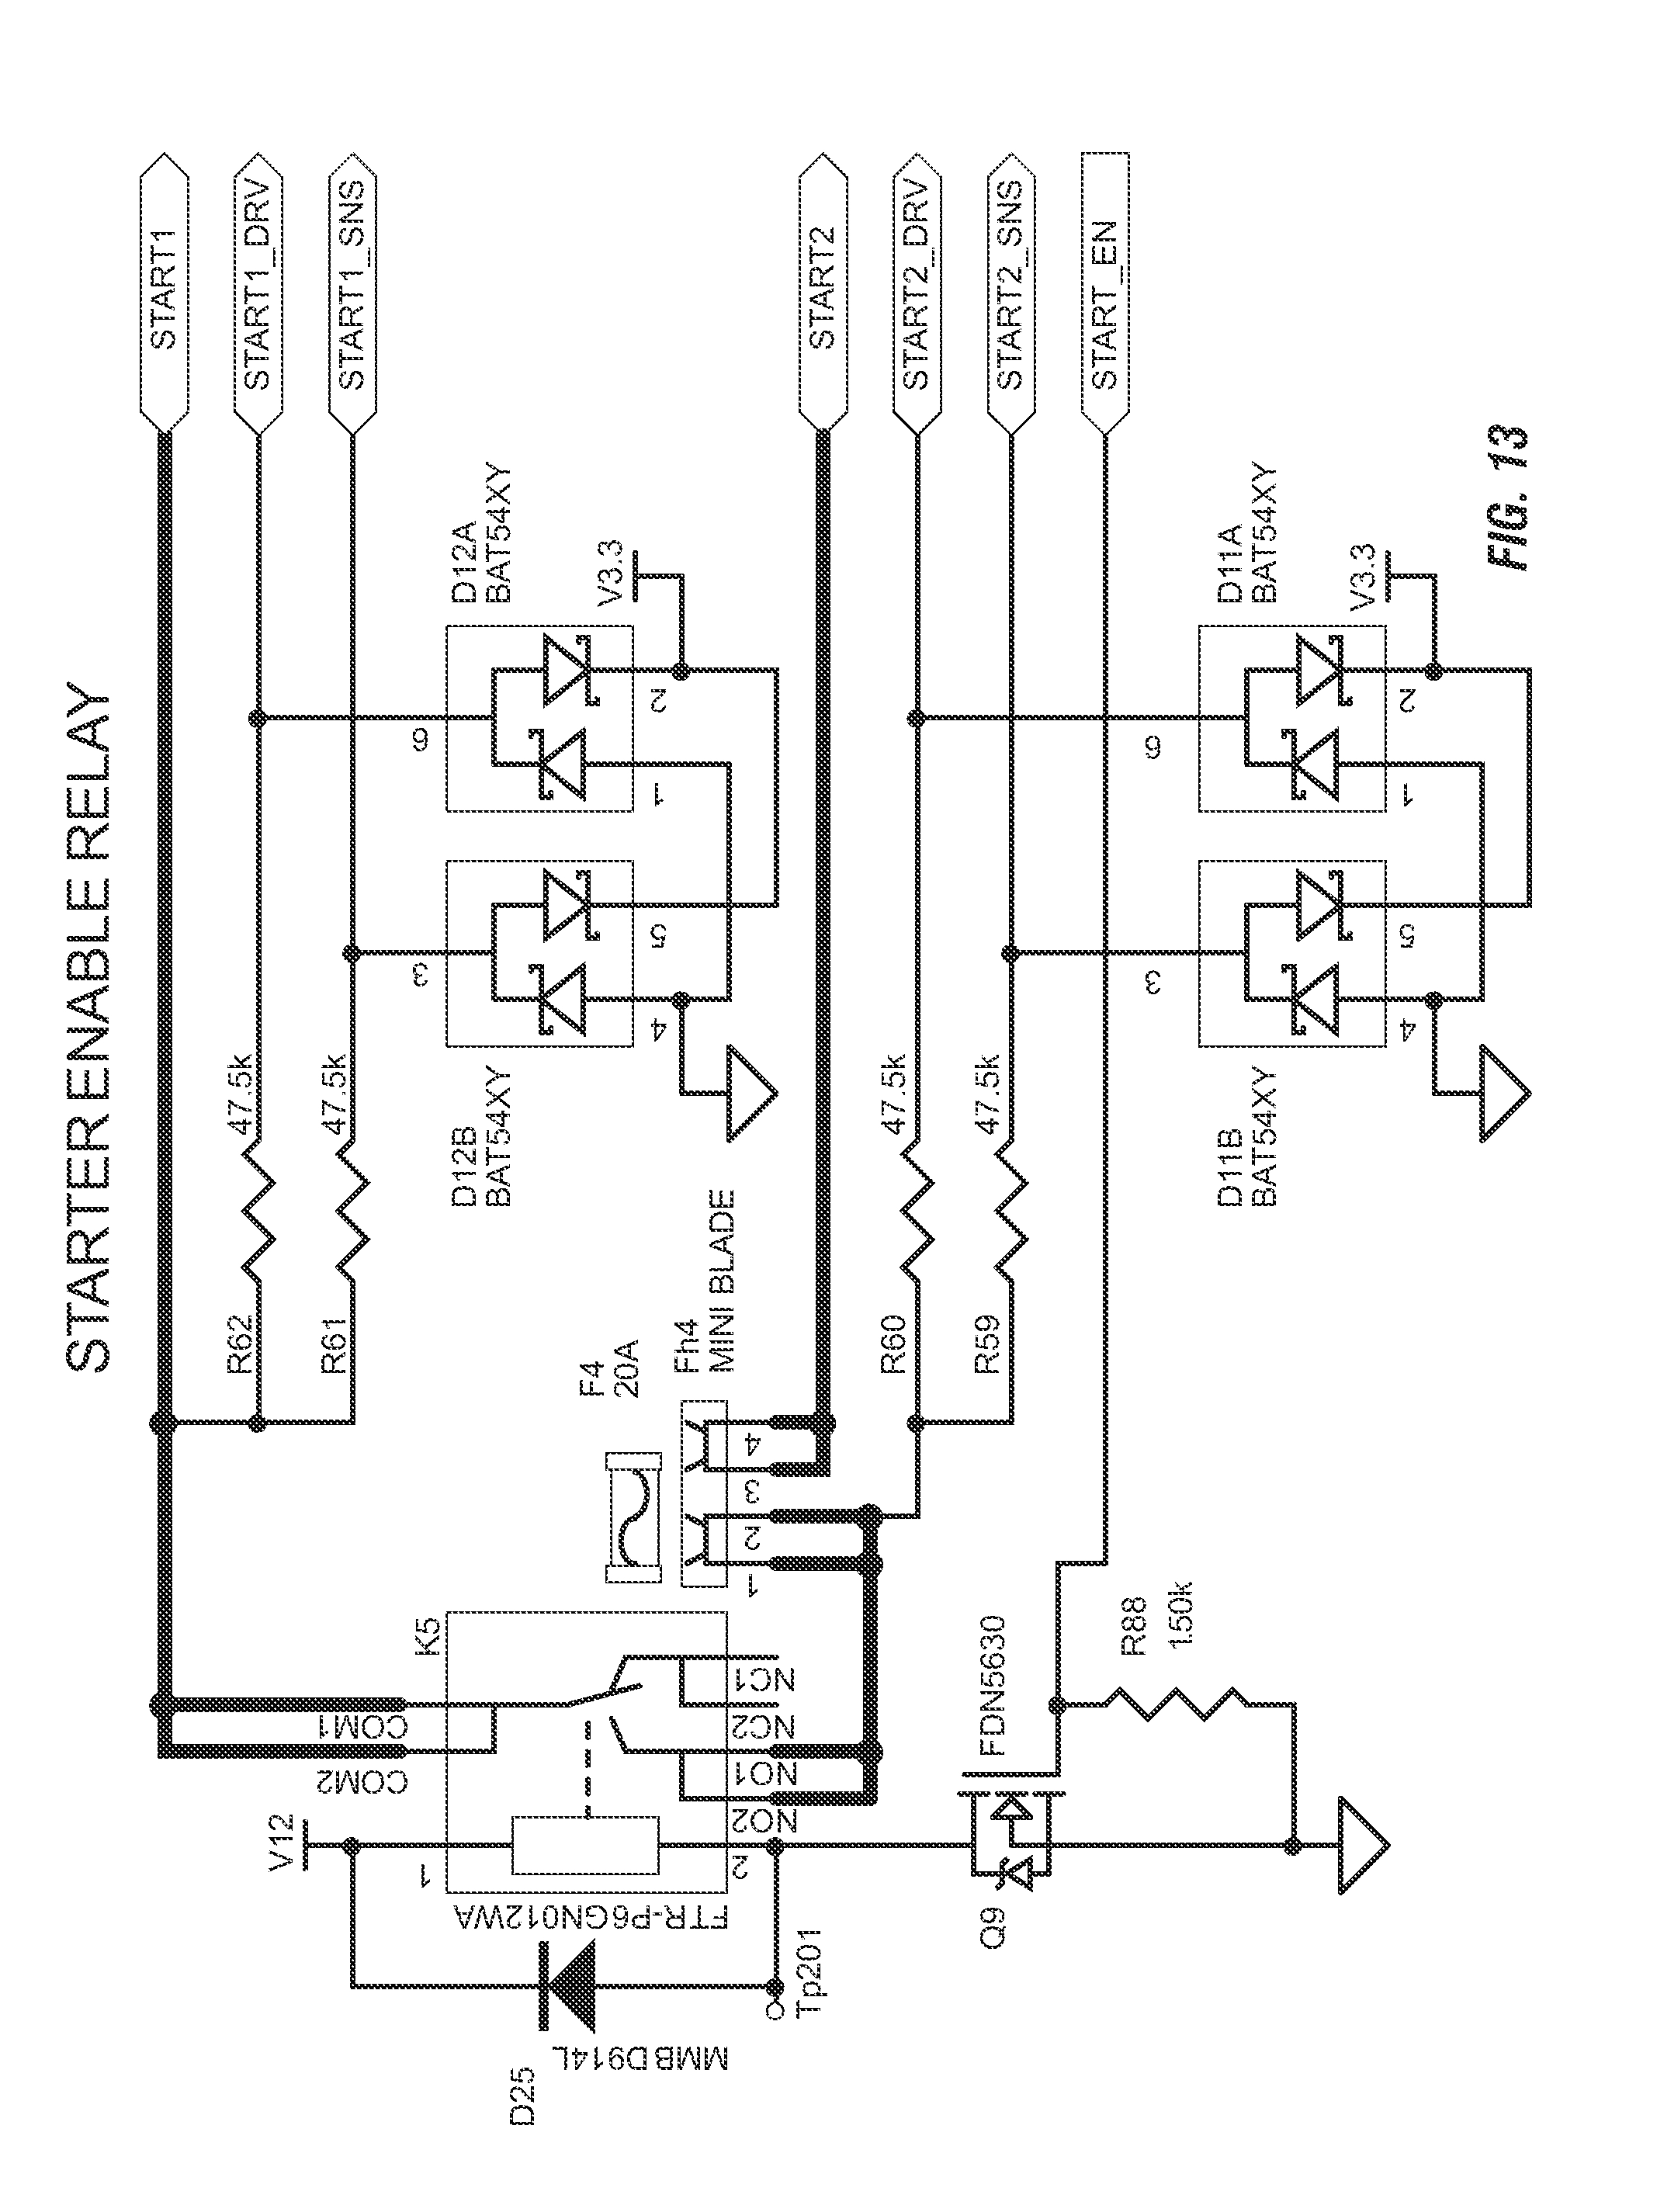 wiring diagram for smart start interlock wiring diagrams konsultwiring diagram for smart start interlock wiring diagram